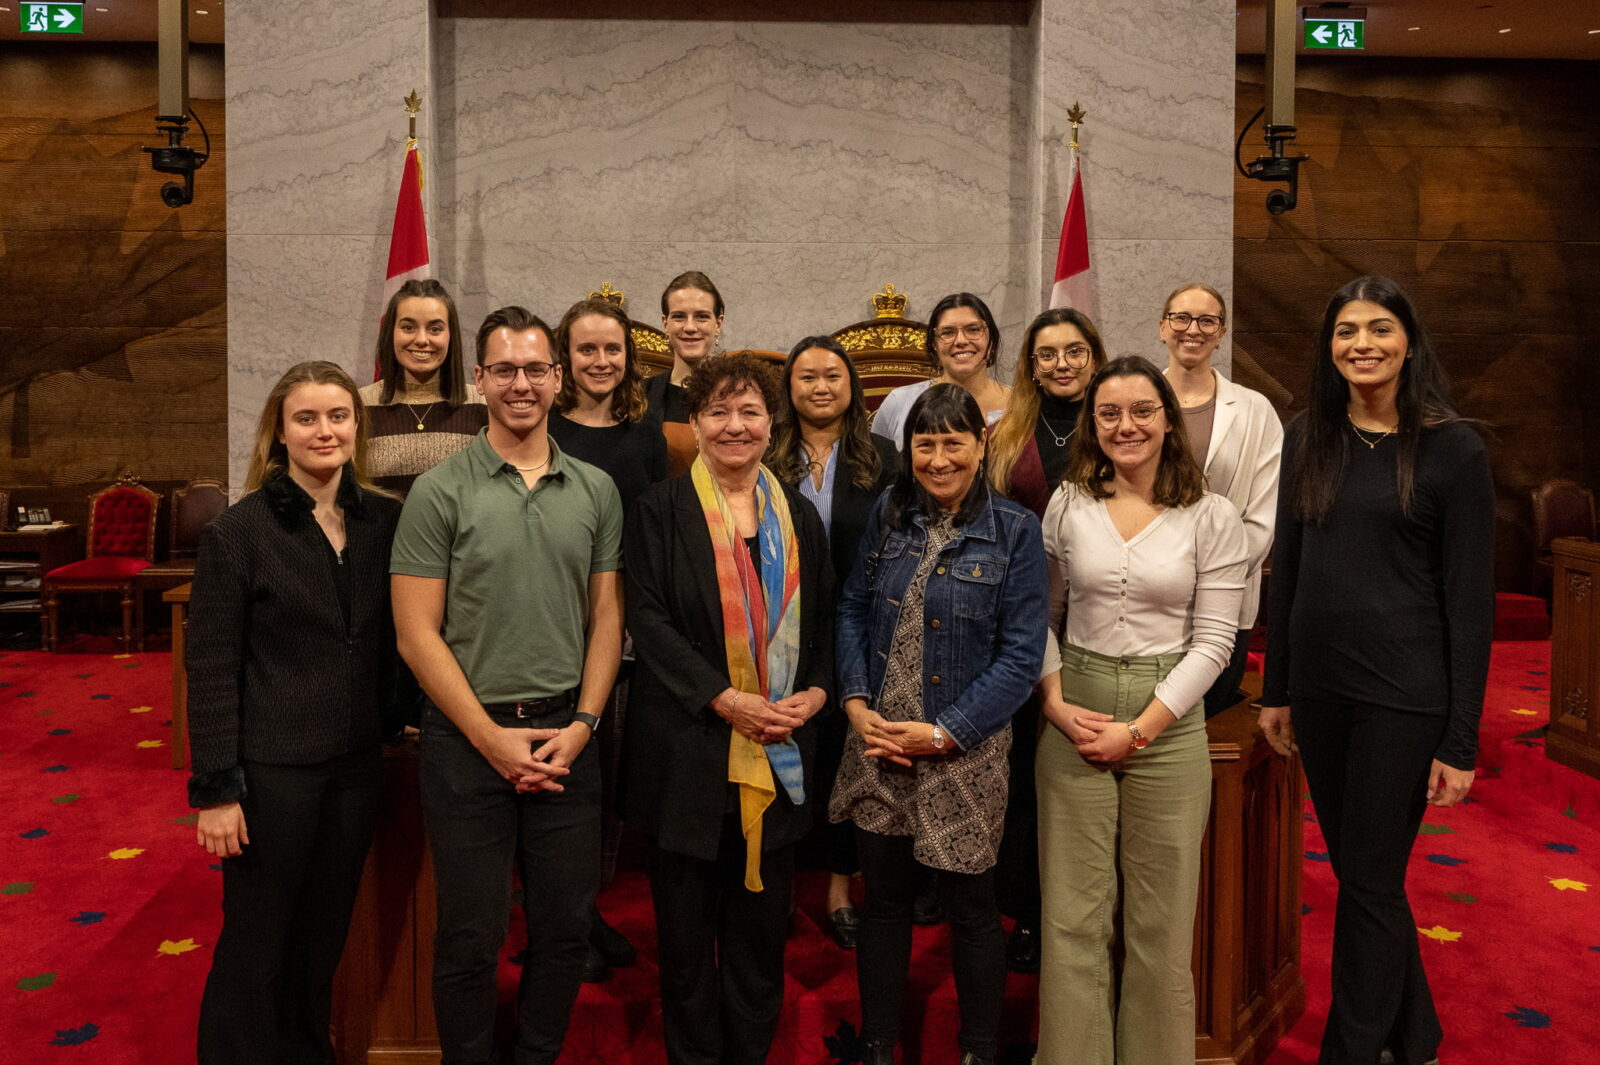 University of Ottawa Feminist Law Reform class visit